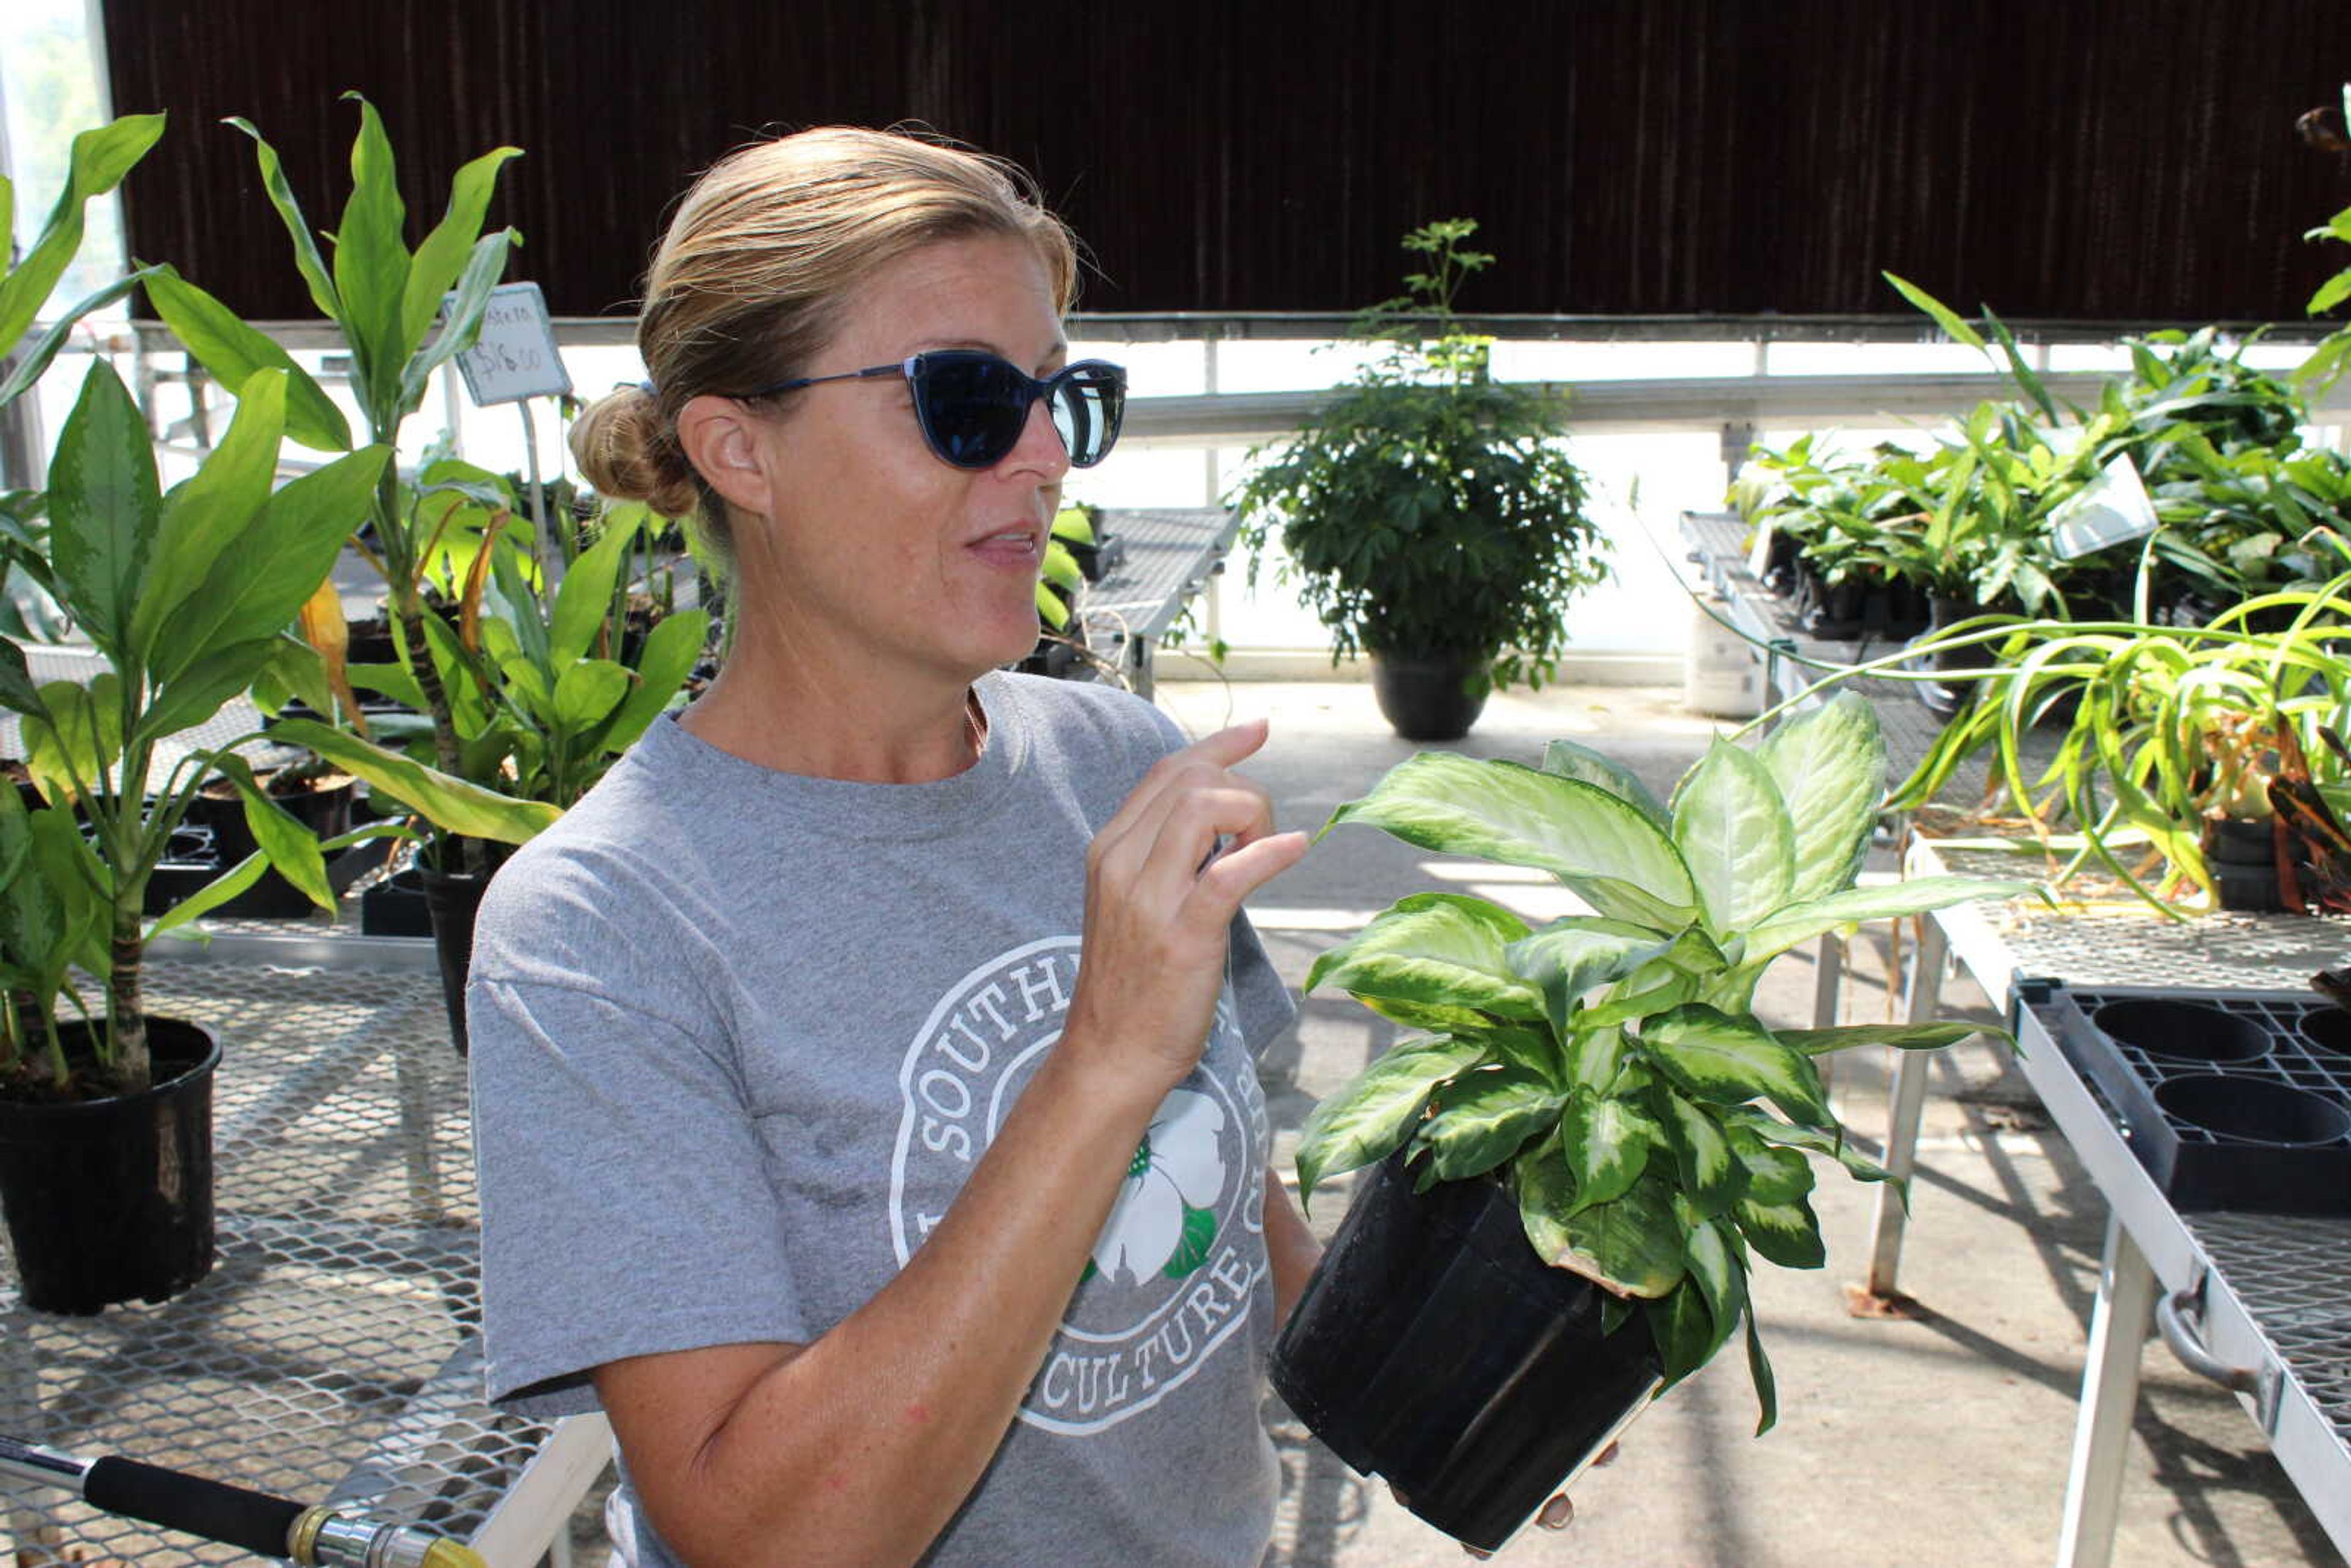 SEMO students showcase horticulture skills at Charles Hutson Greenhouse